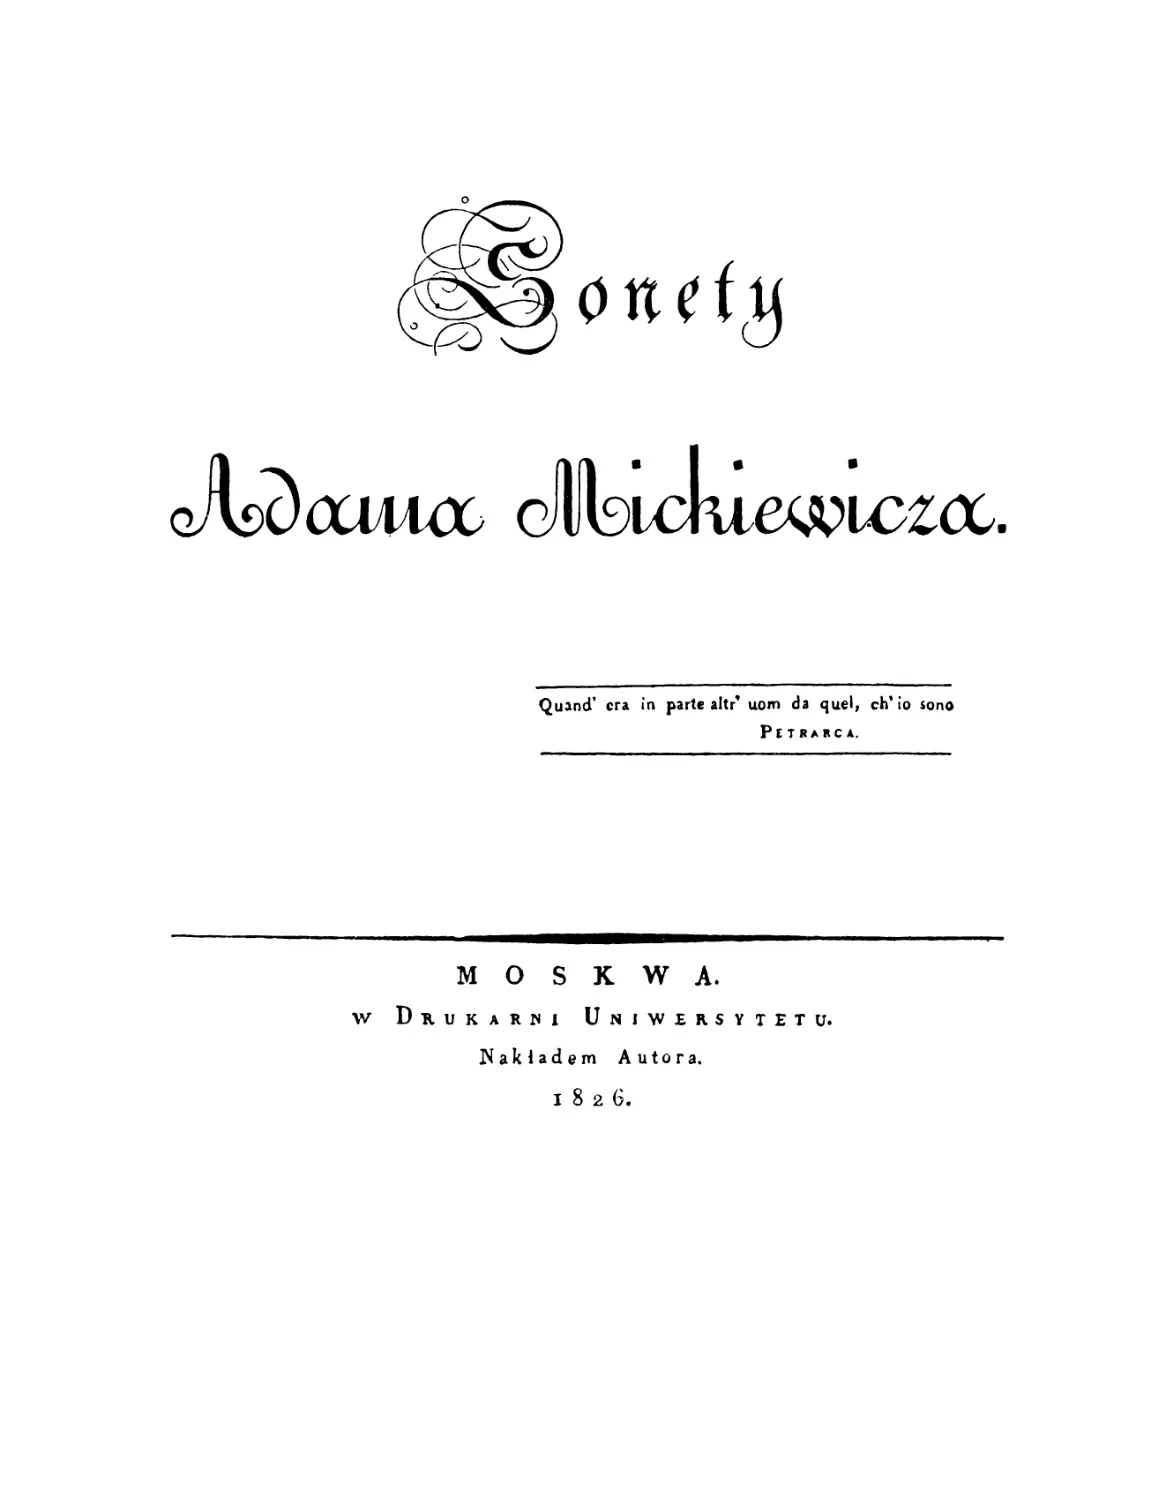 Sonety Adama Mickiewicza. Moskwa, 1826